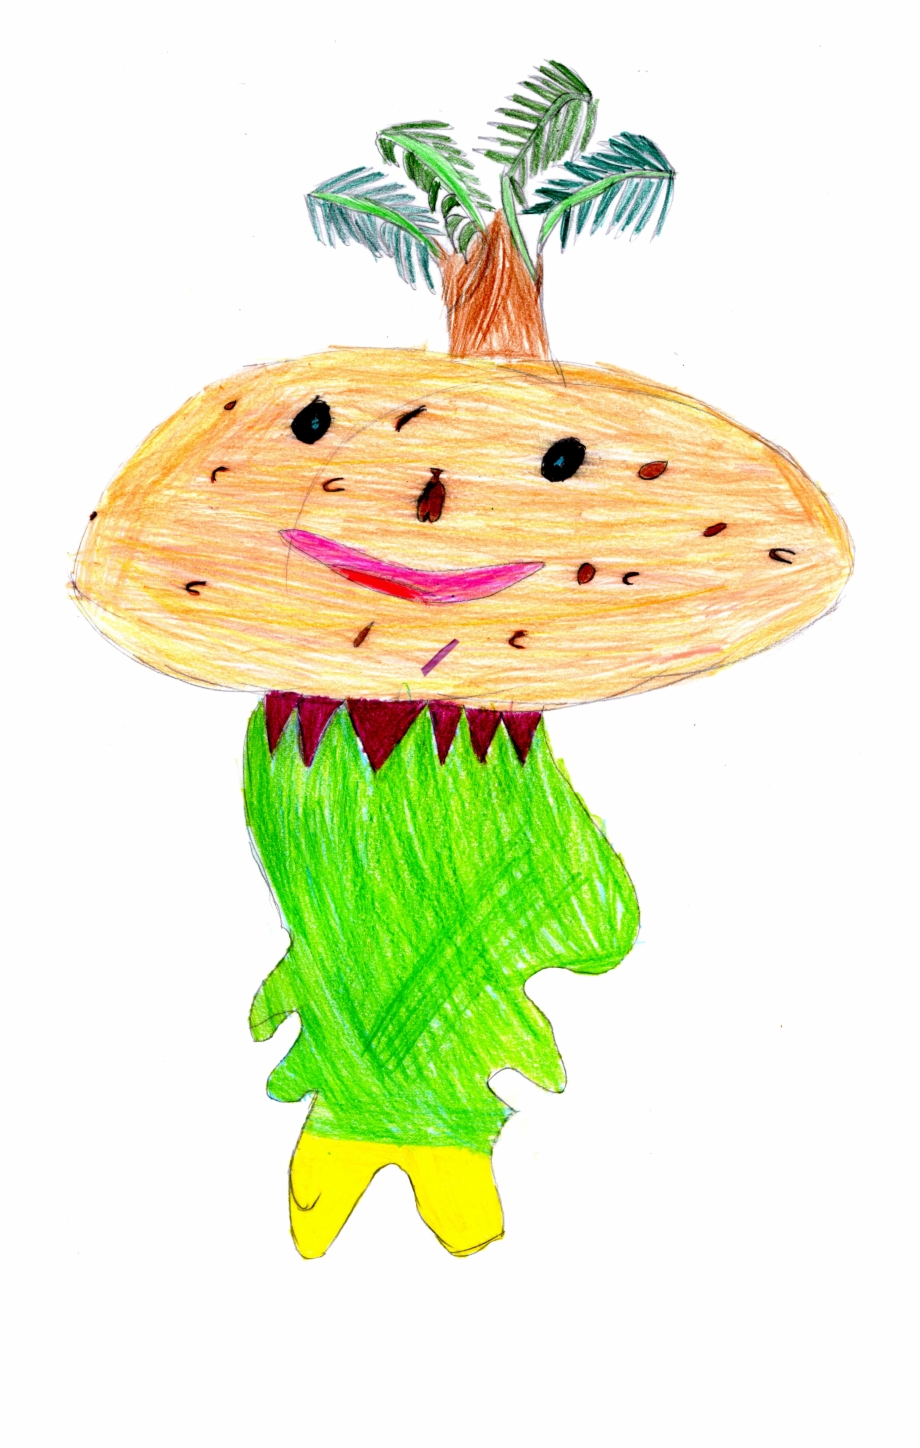 Potato Headed Palm Tree Illustration